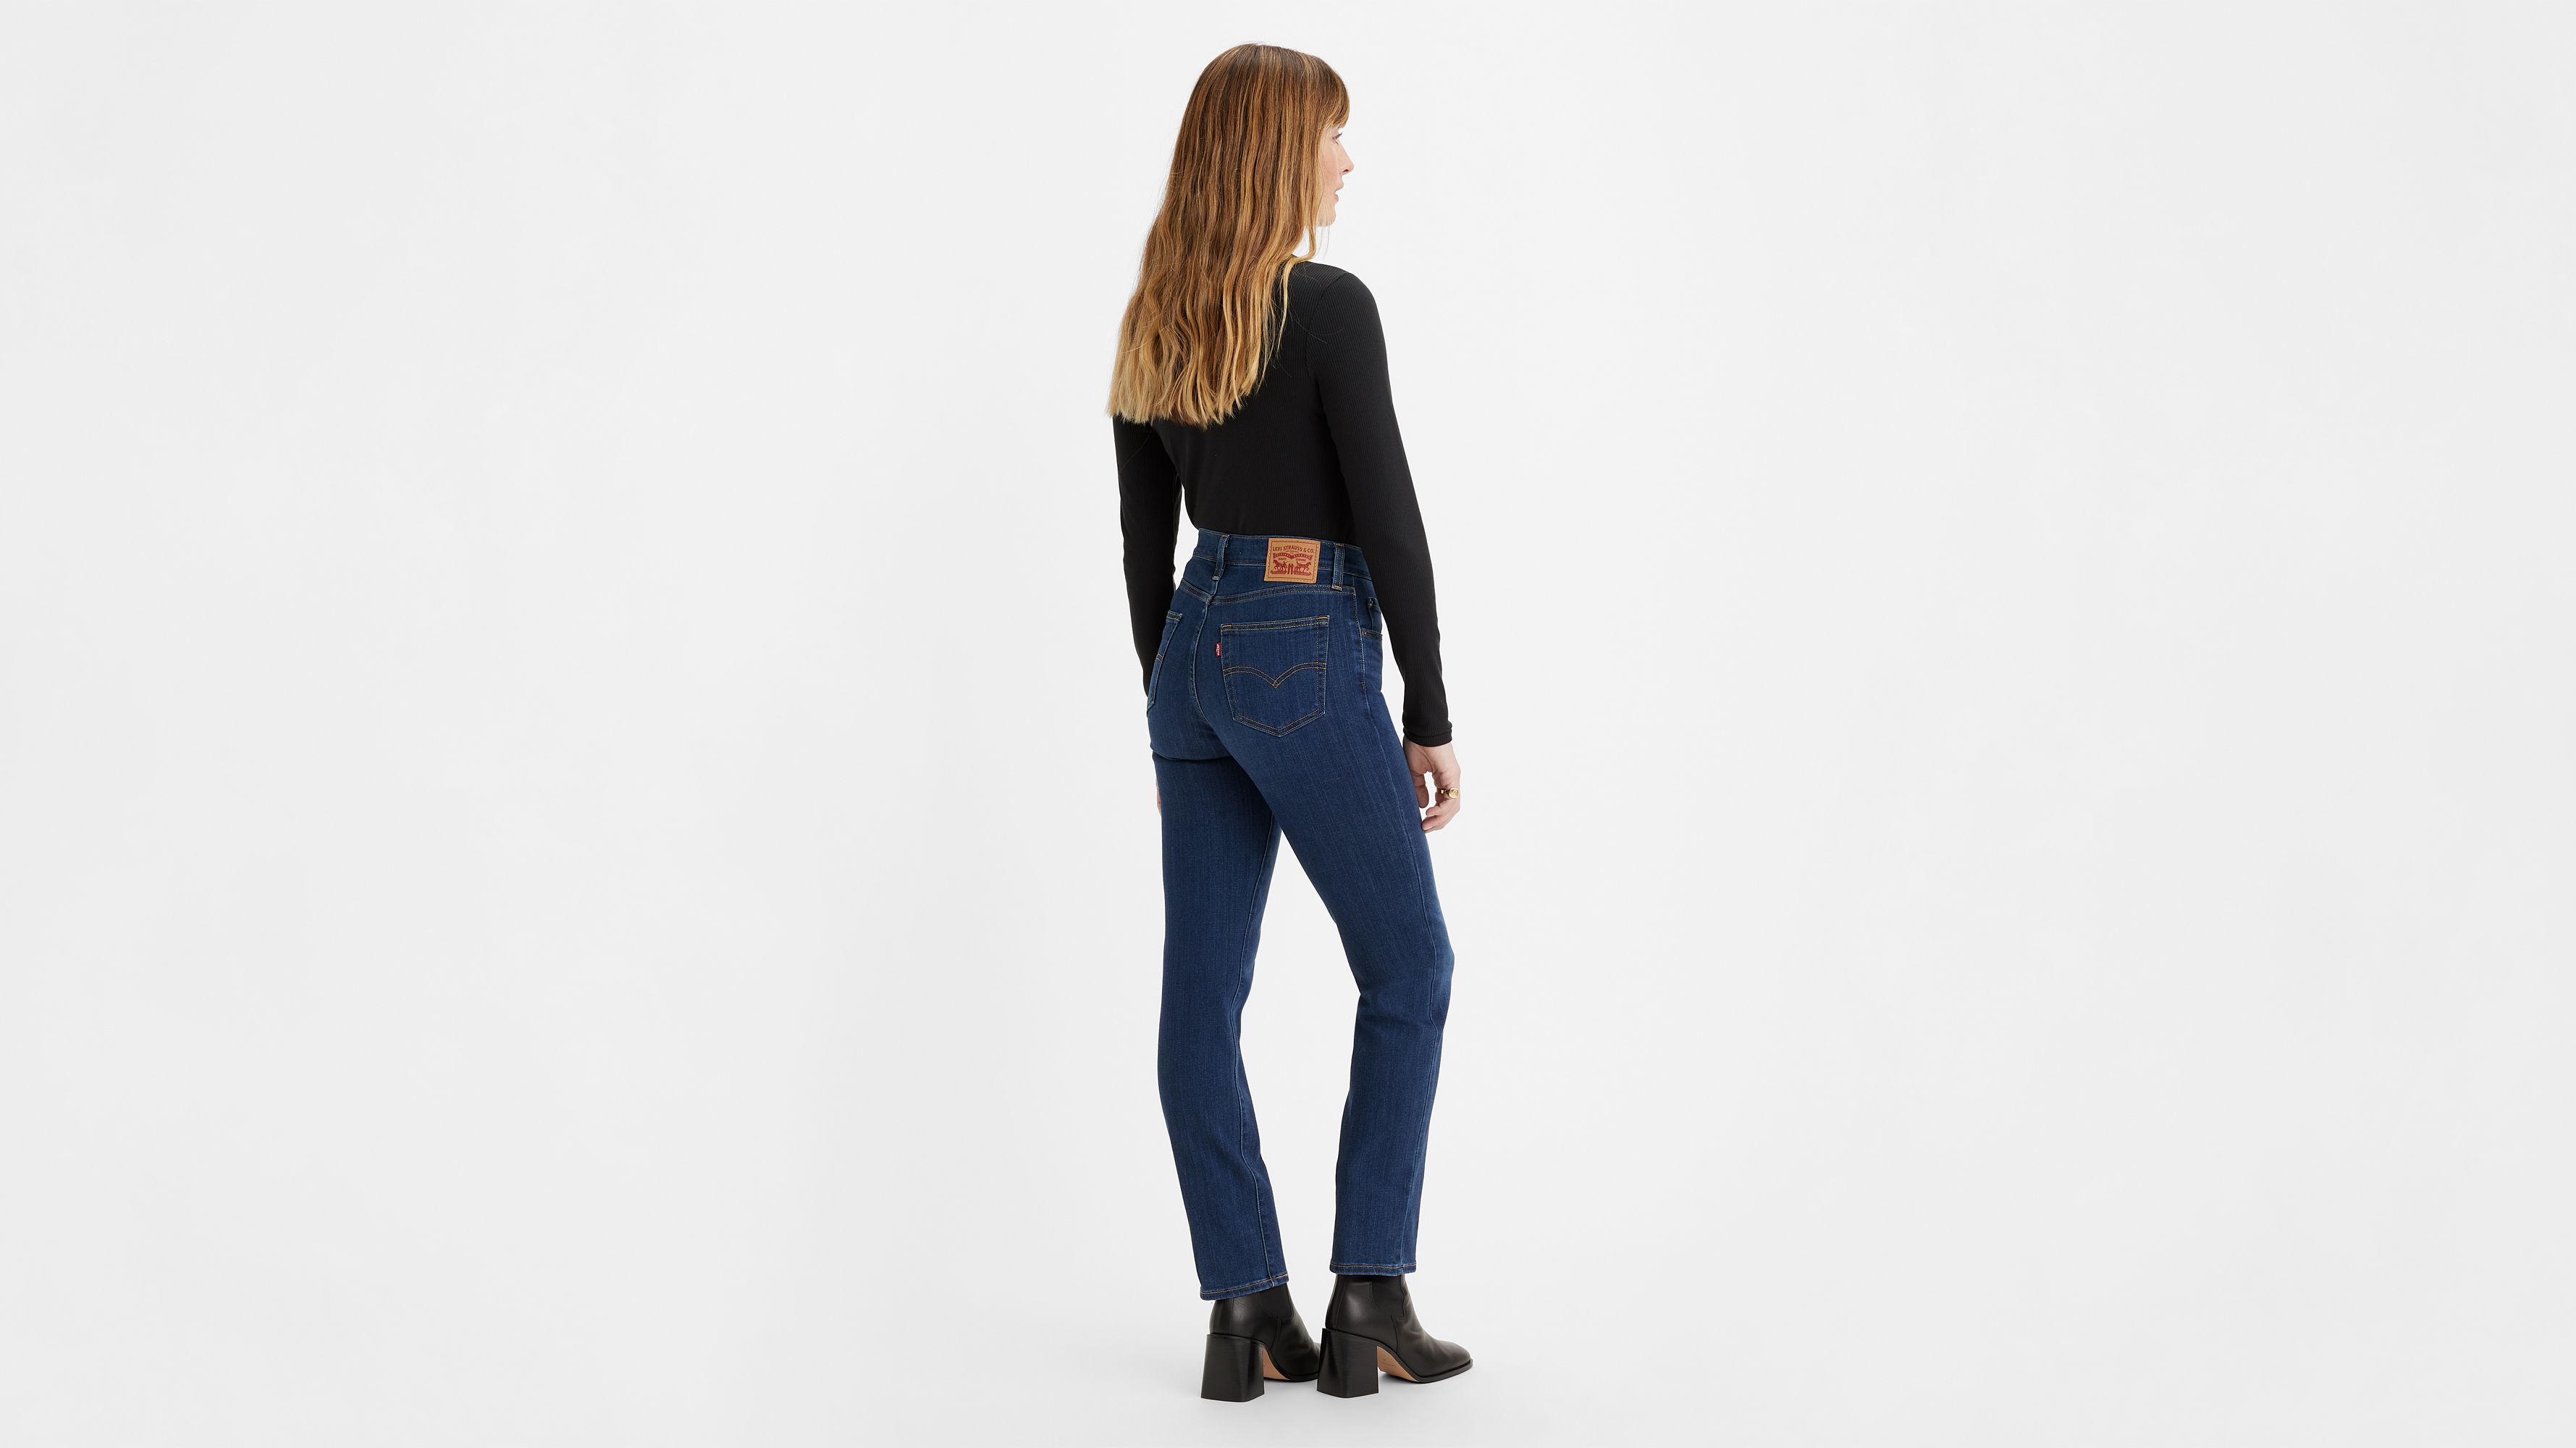 724 High Rise Slim Straight Women's Jeans